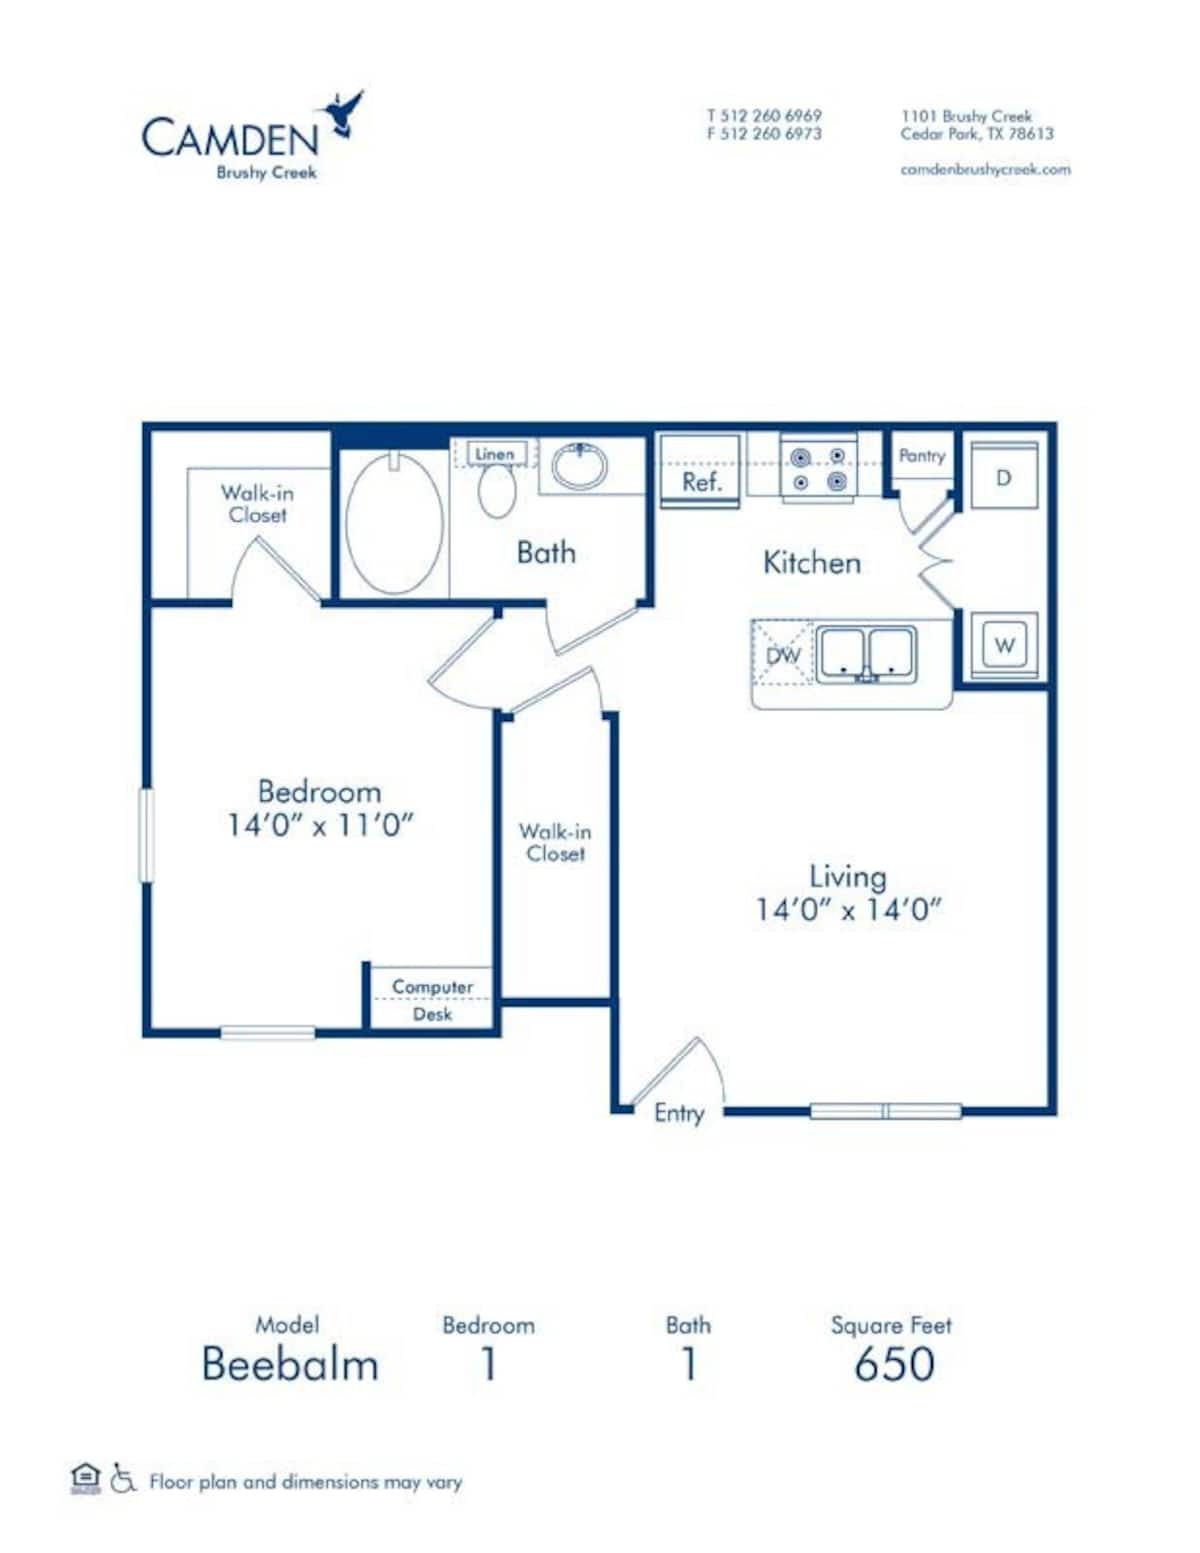 Floorplan diagram for Beebalm, showing 1 bedroom